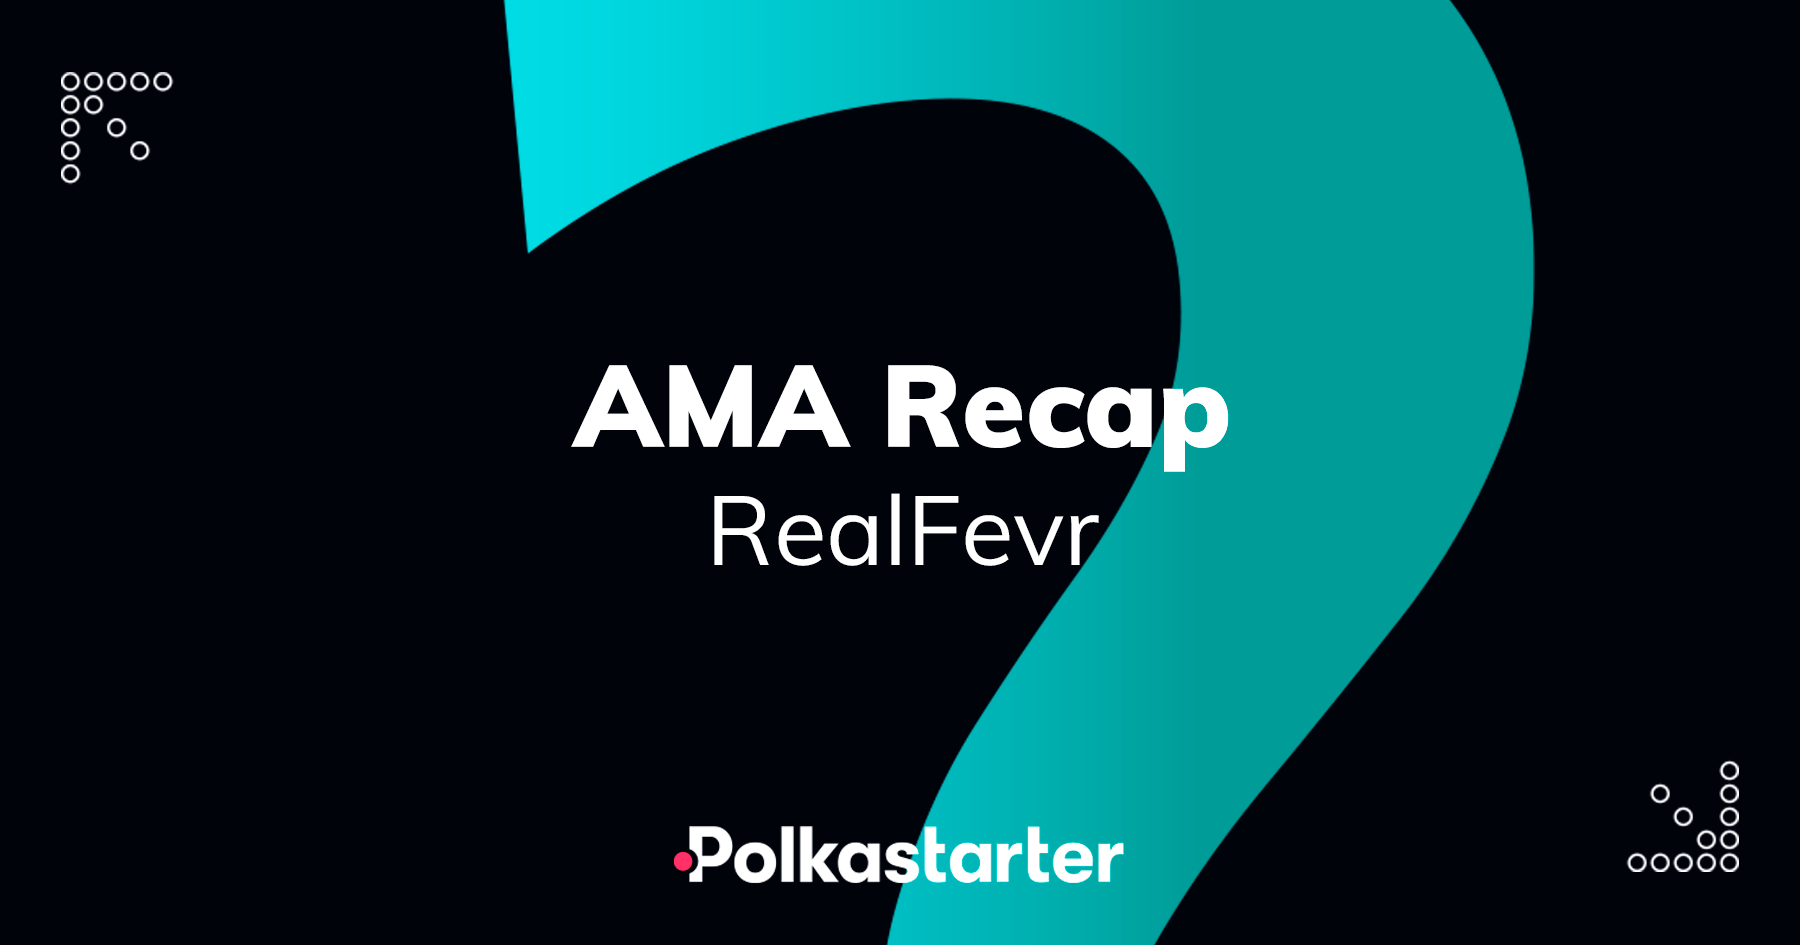 Polkastarter and RealFevr AMA Recap